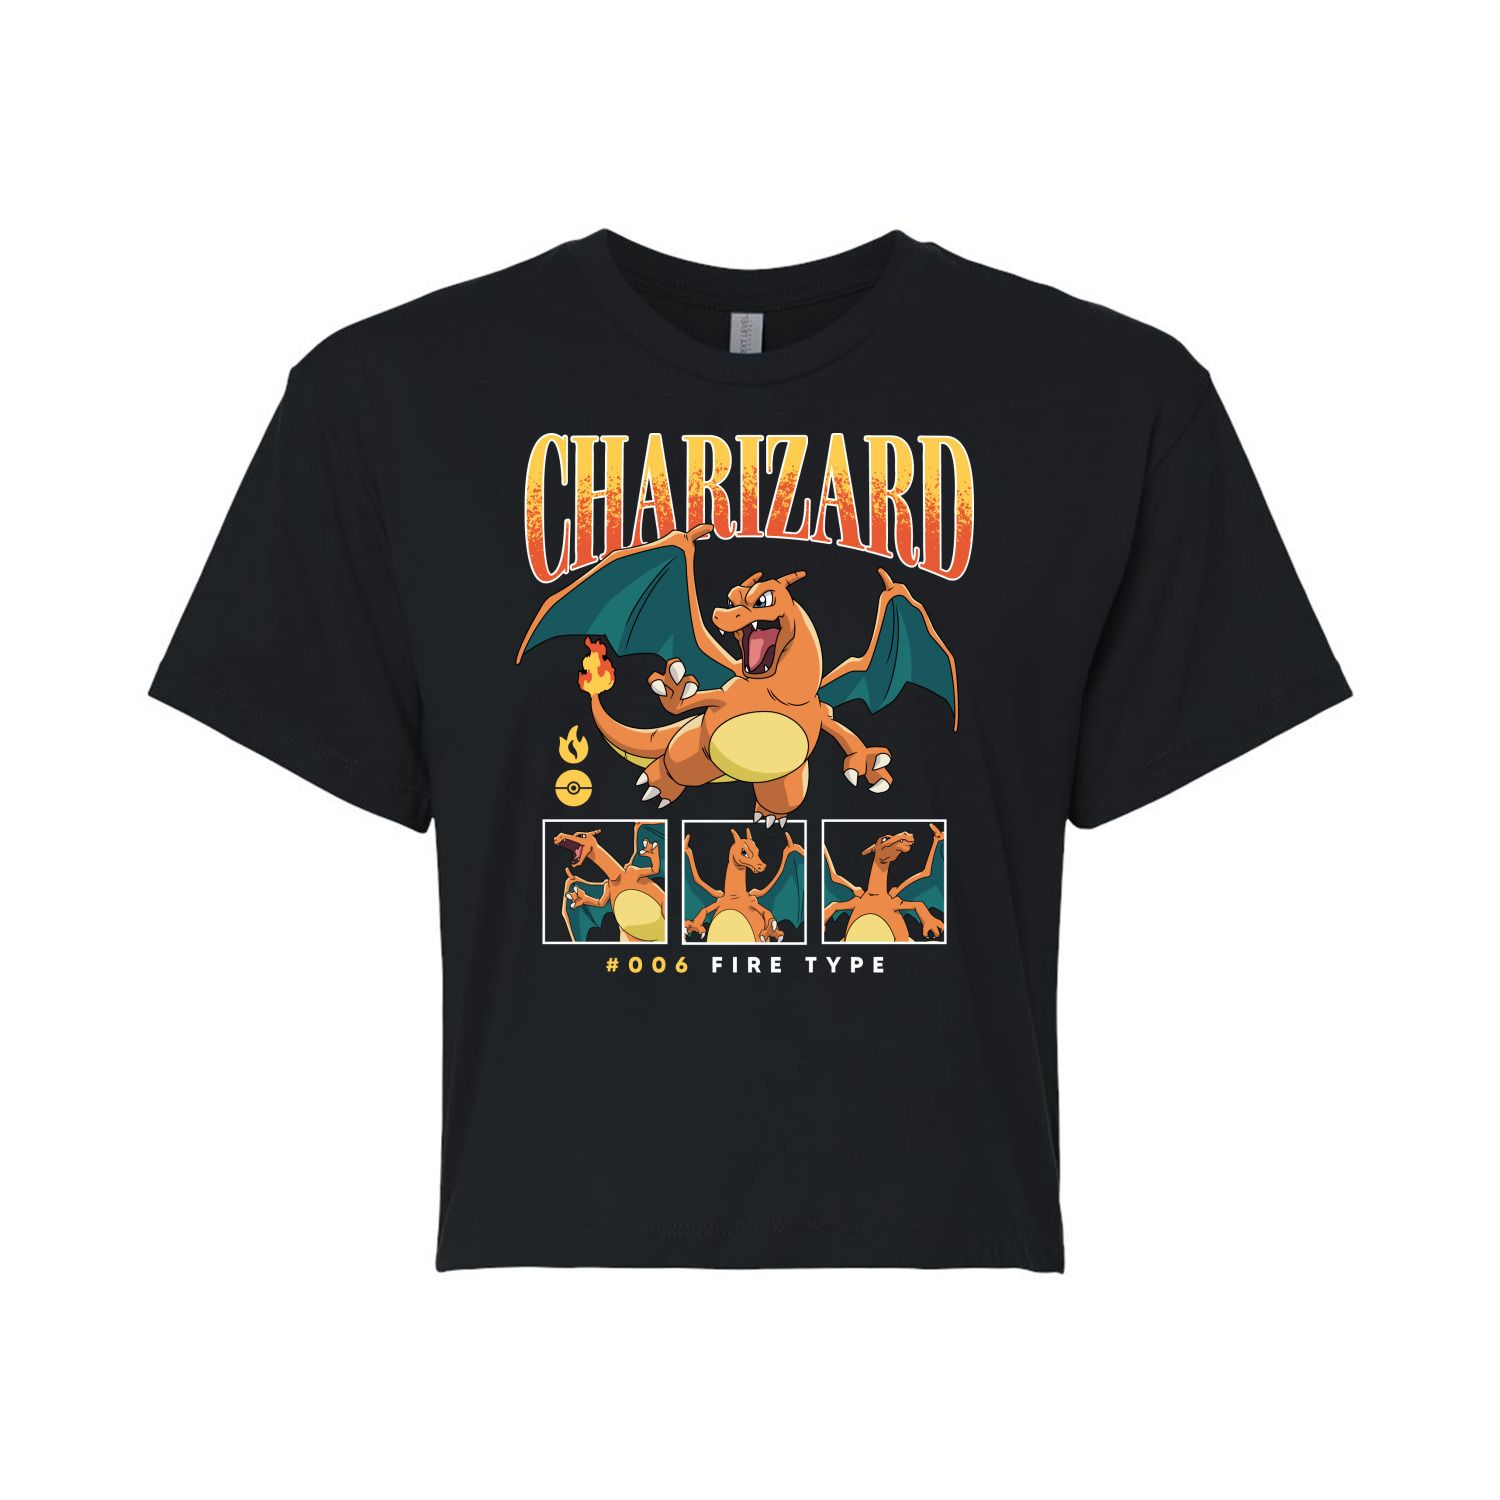 Укороченная футболка с рисунком Pokémon Charizard для юниоров Licensed Character